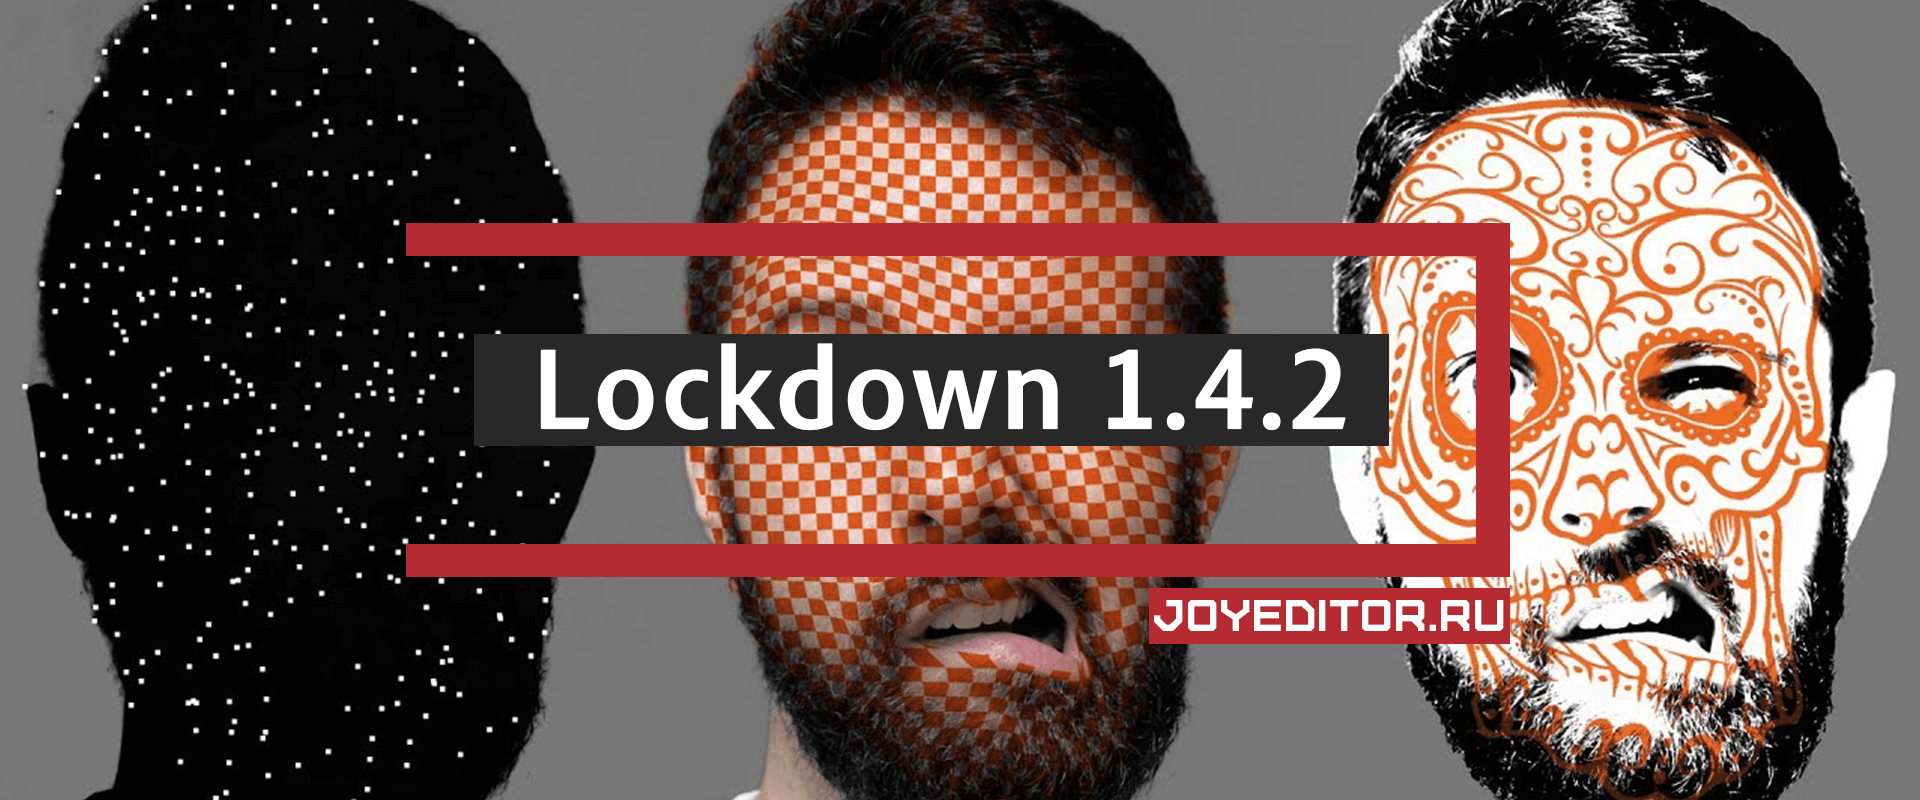 Lockdown 1.4.2